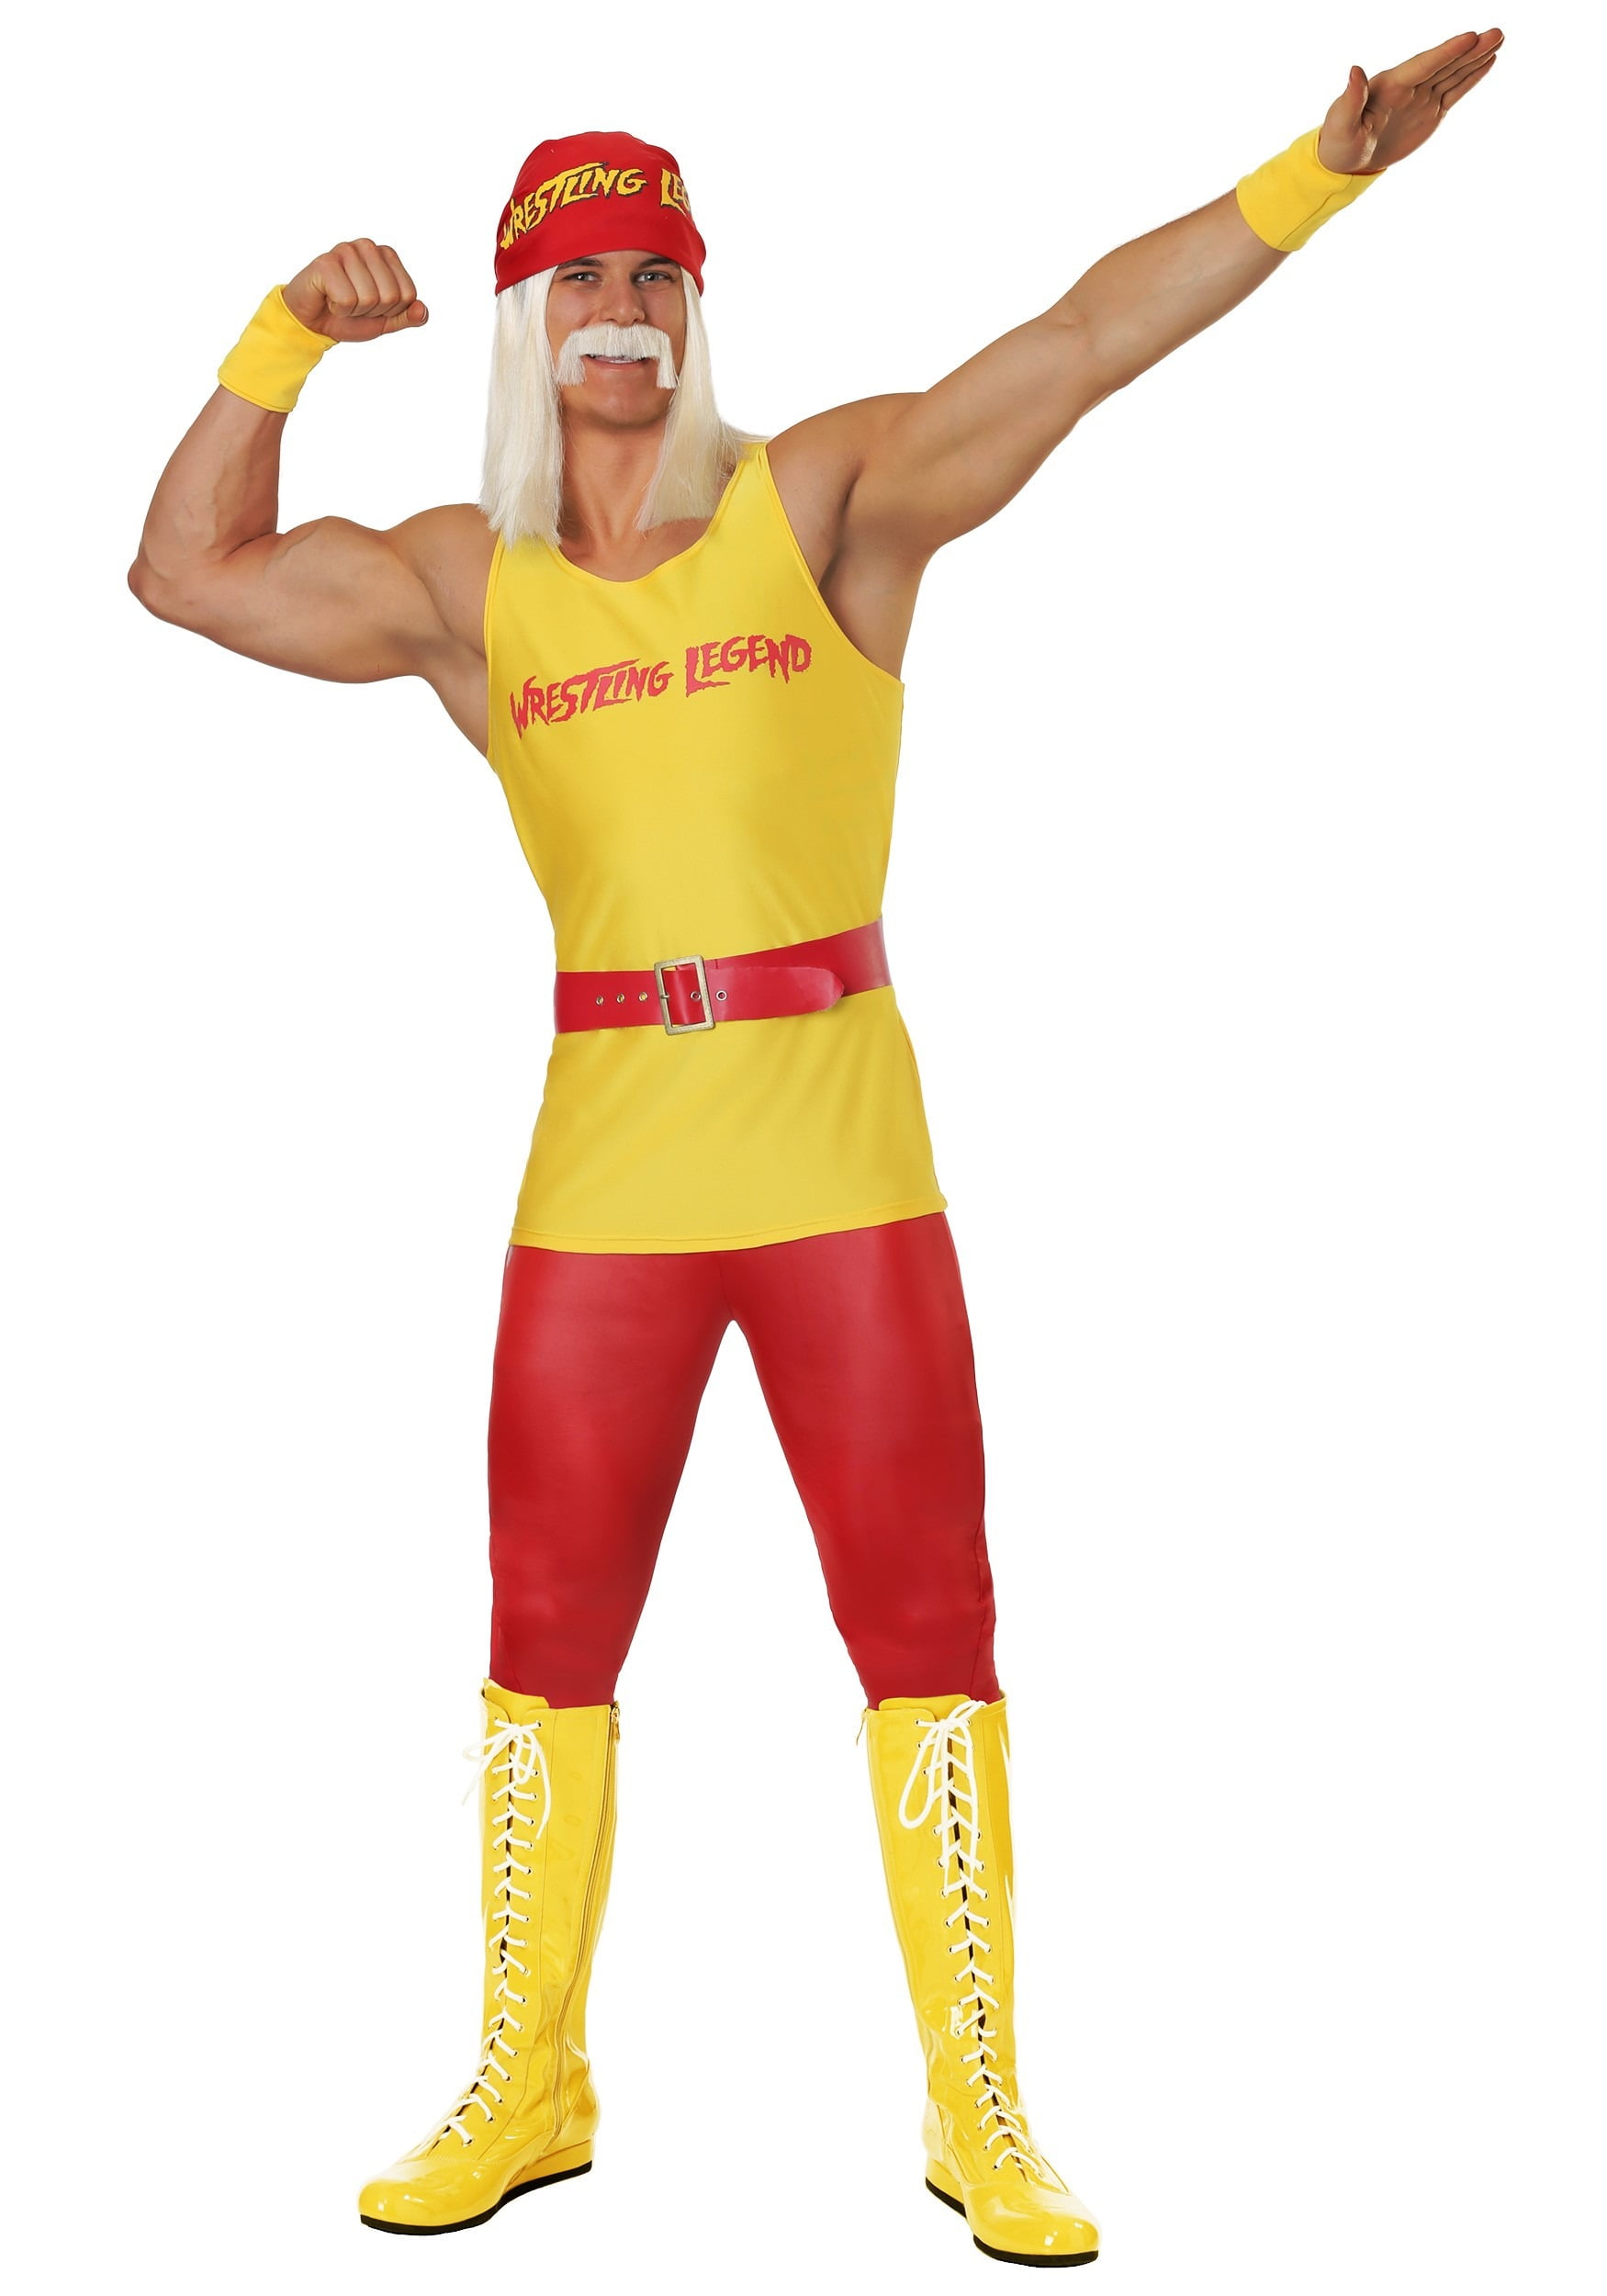 Men's Wrestling Legend Costume - Walmart.com.